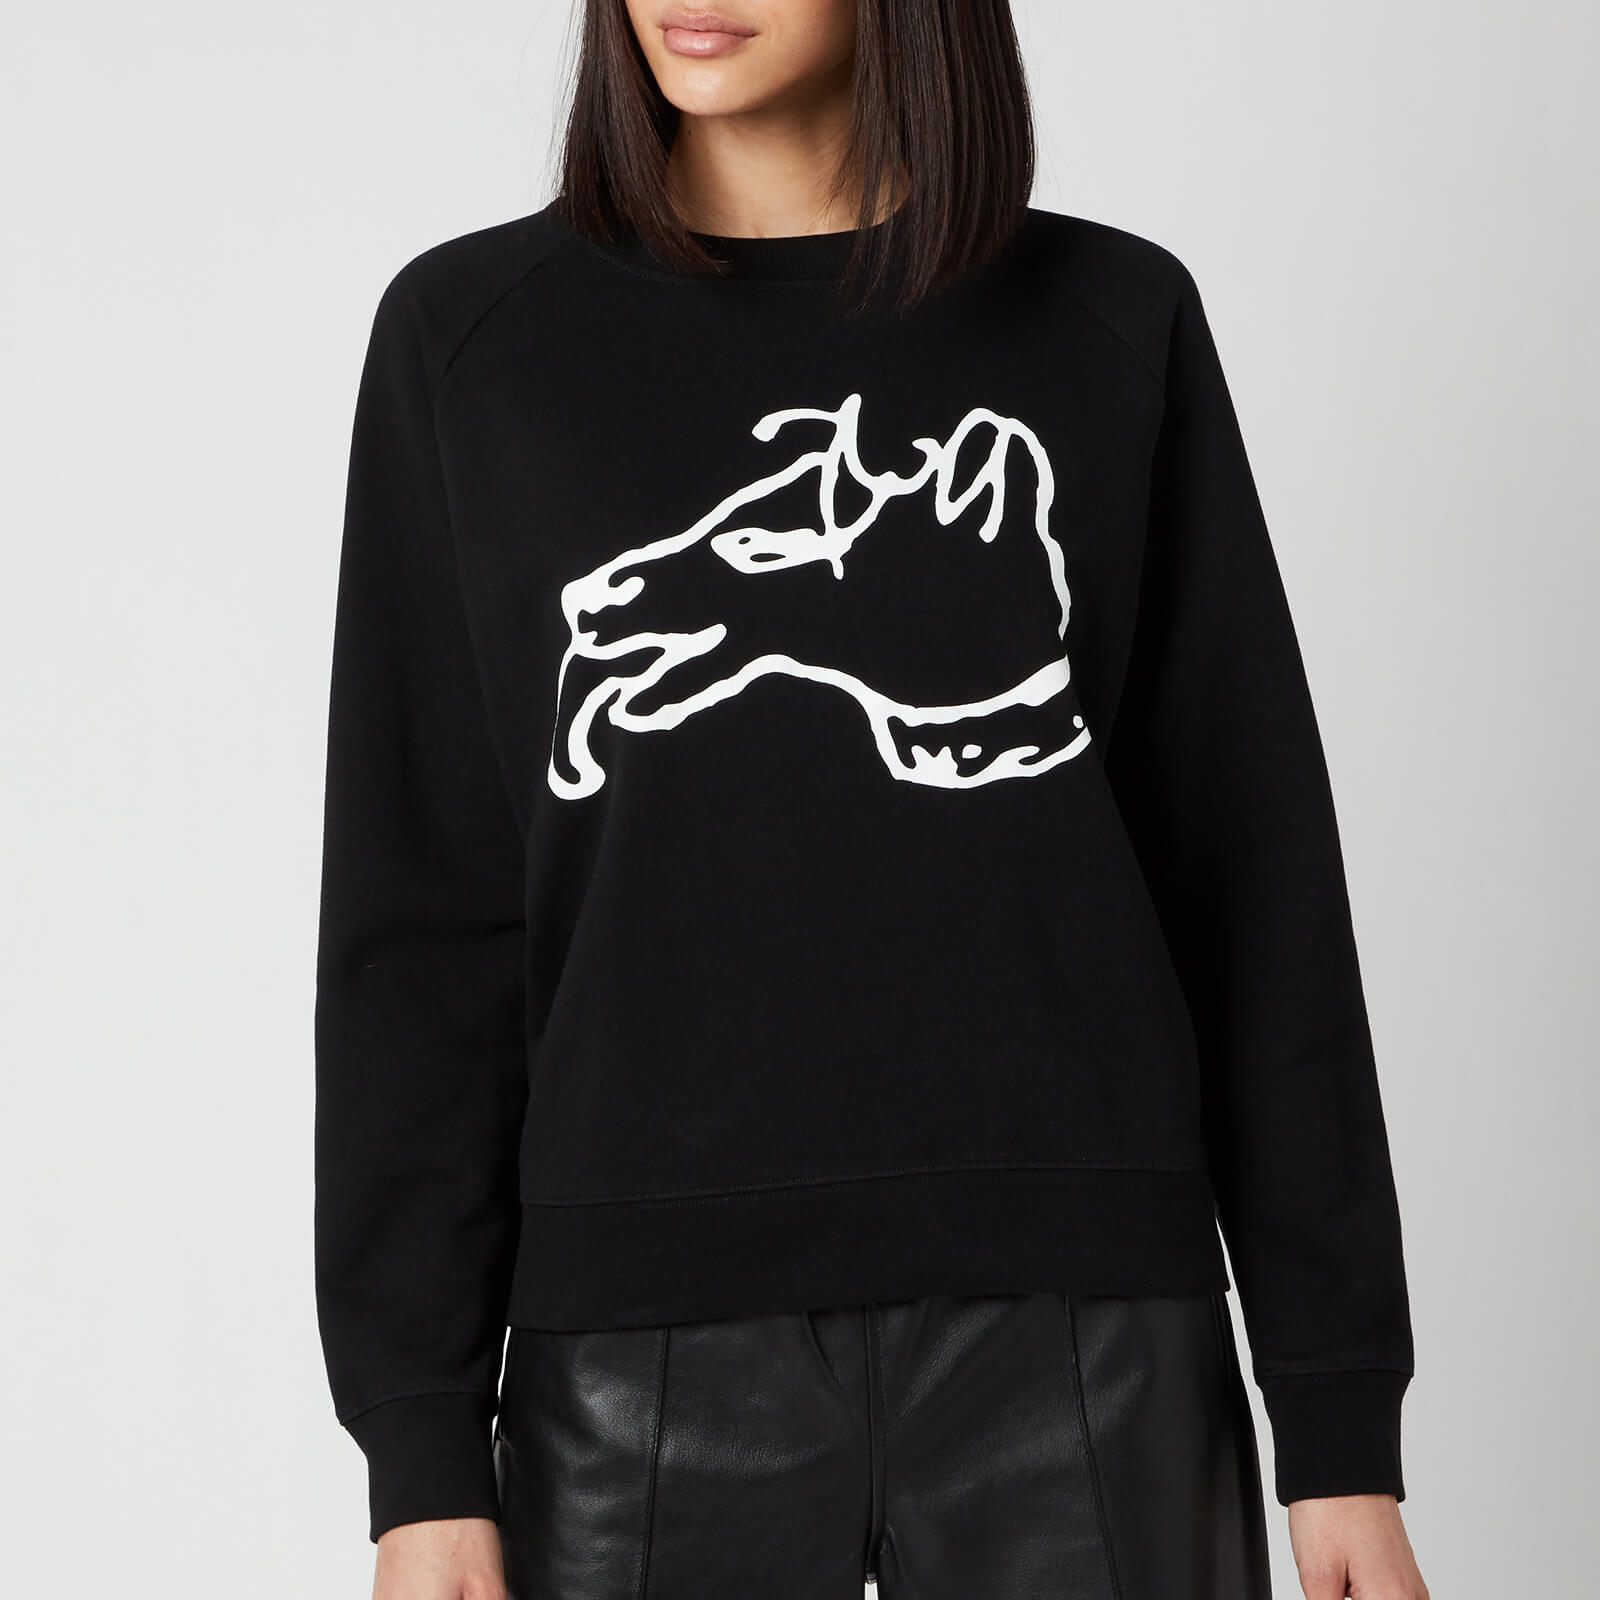 Bella Freud Women's Big Dog Sweatshirt - Black - S